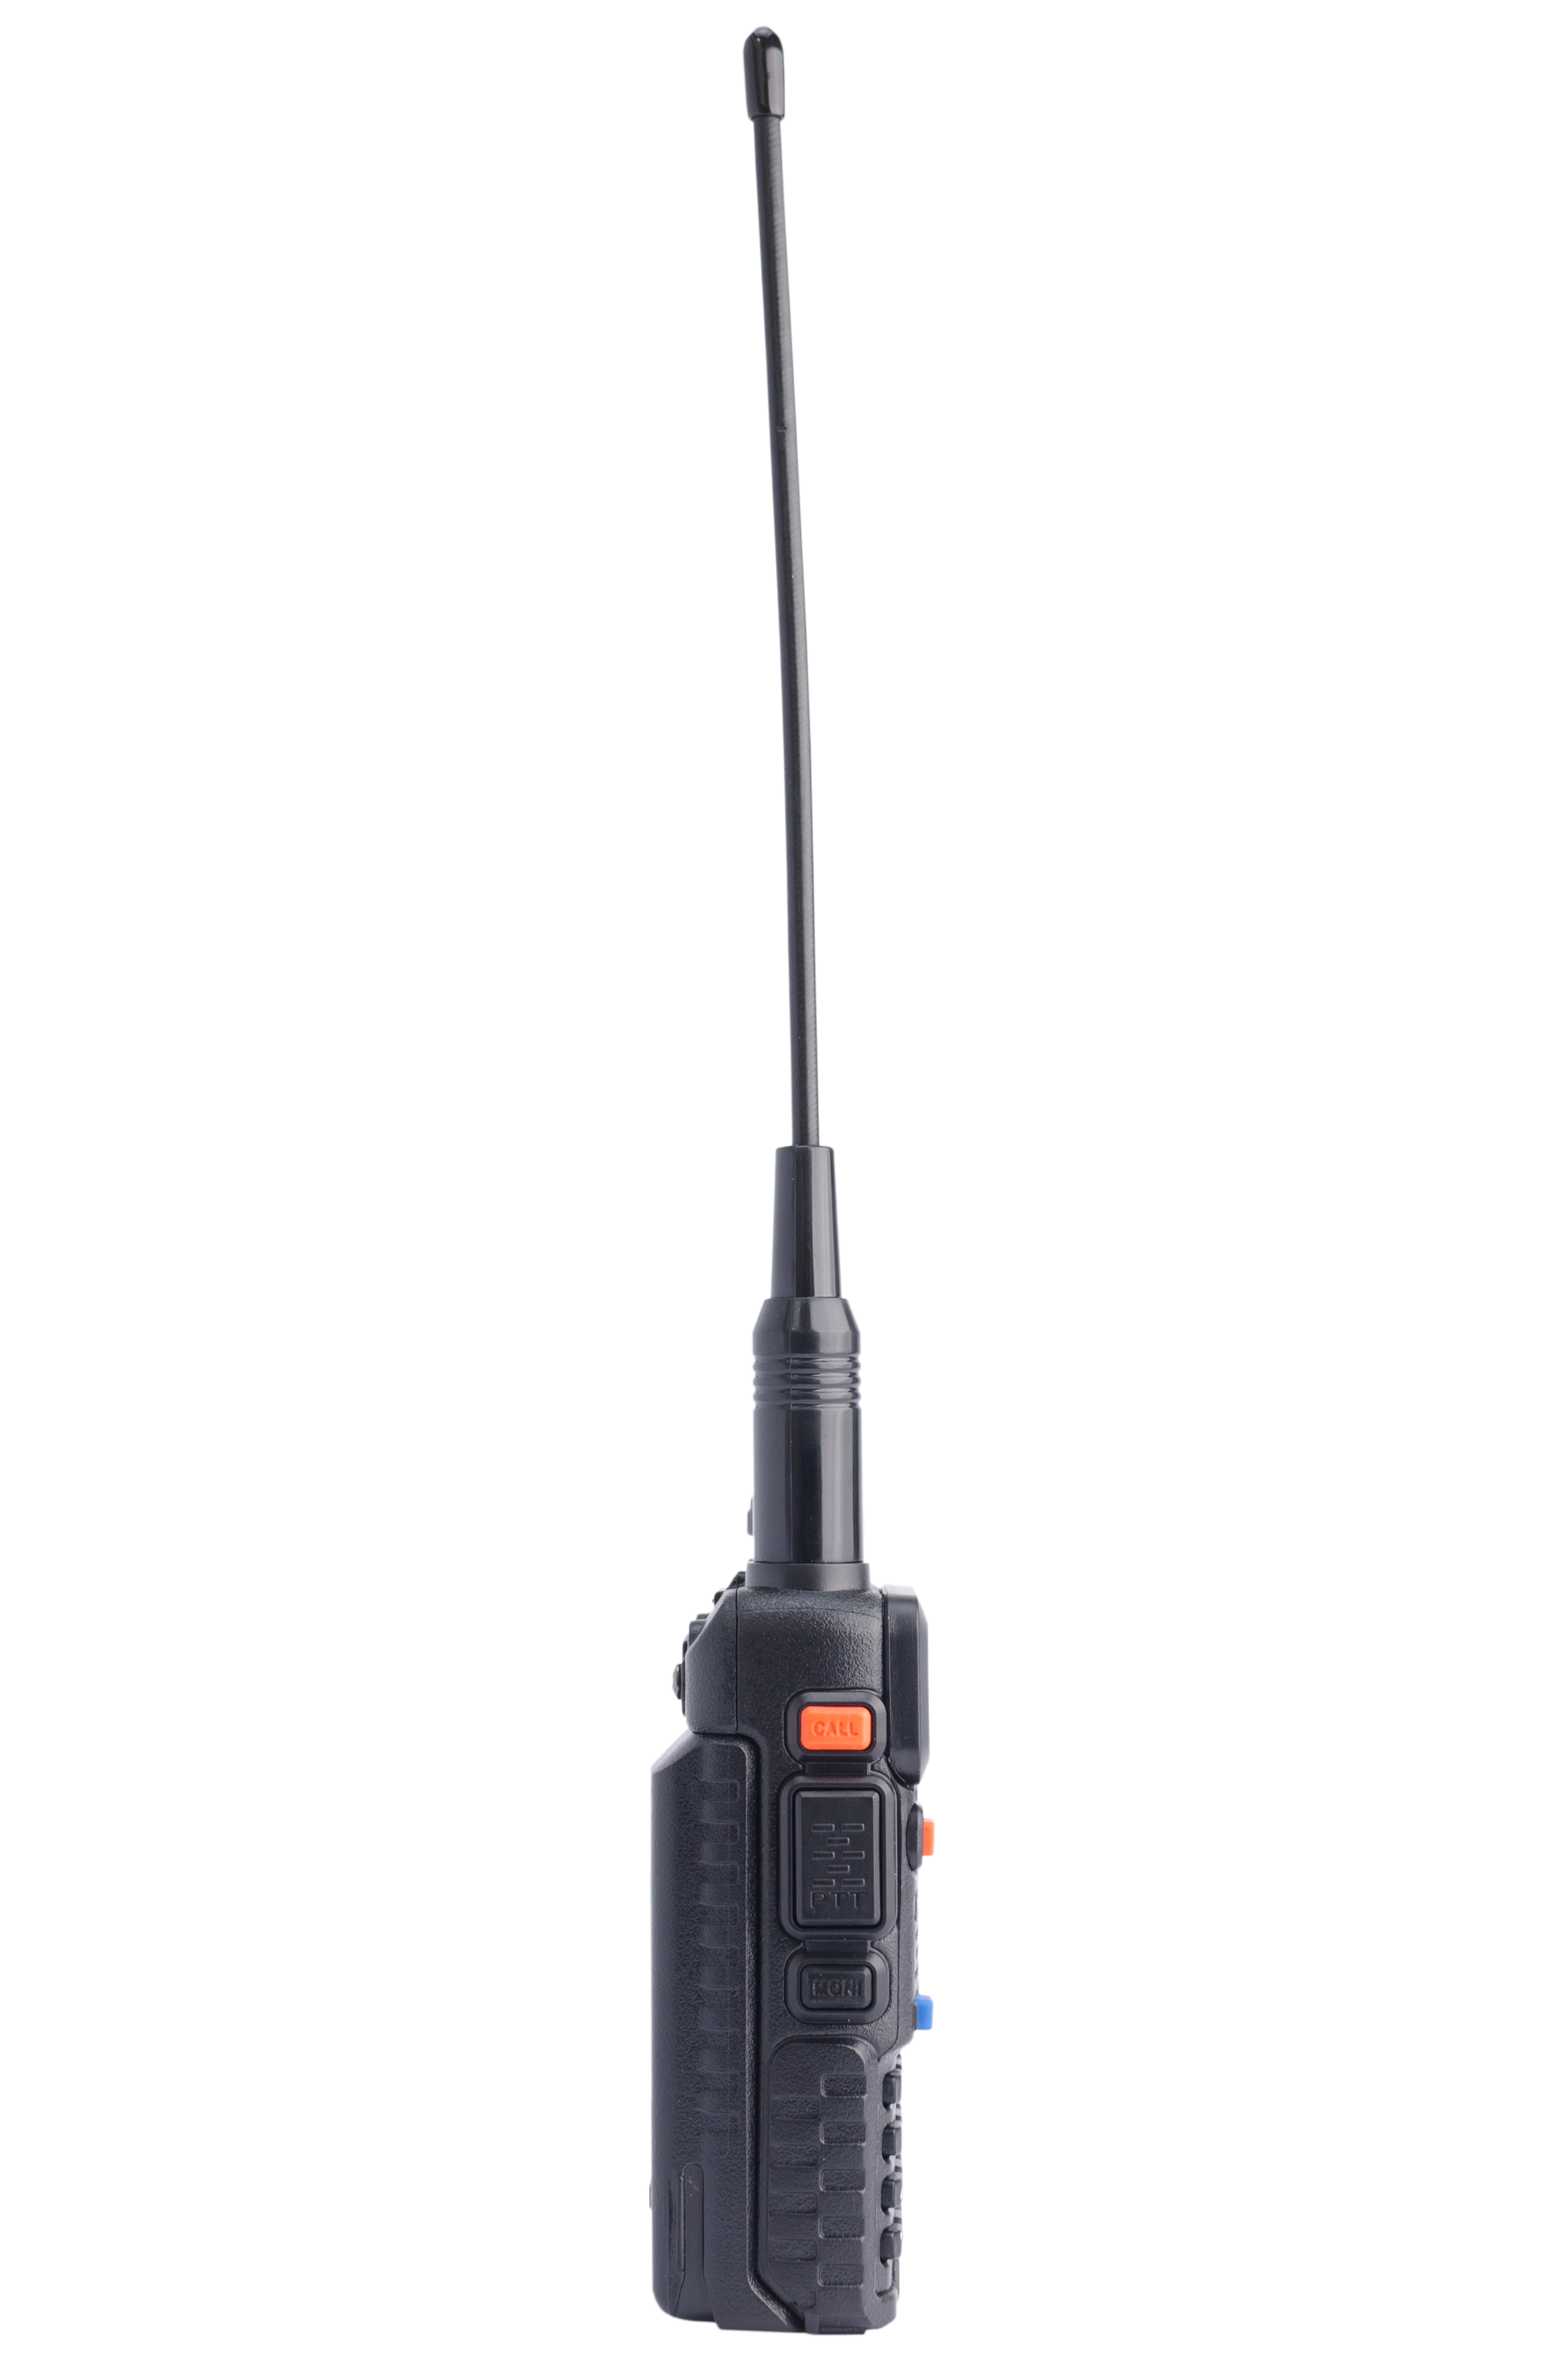 Baofeng DM-5R V3 DMR Portable Radio